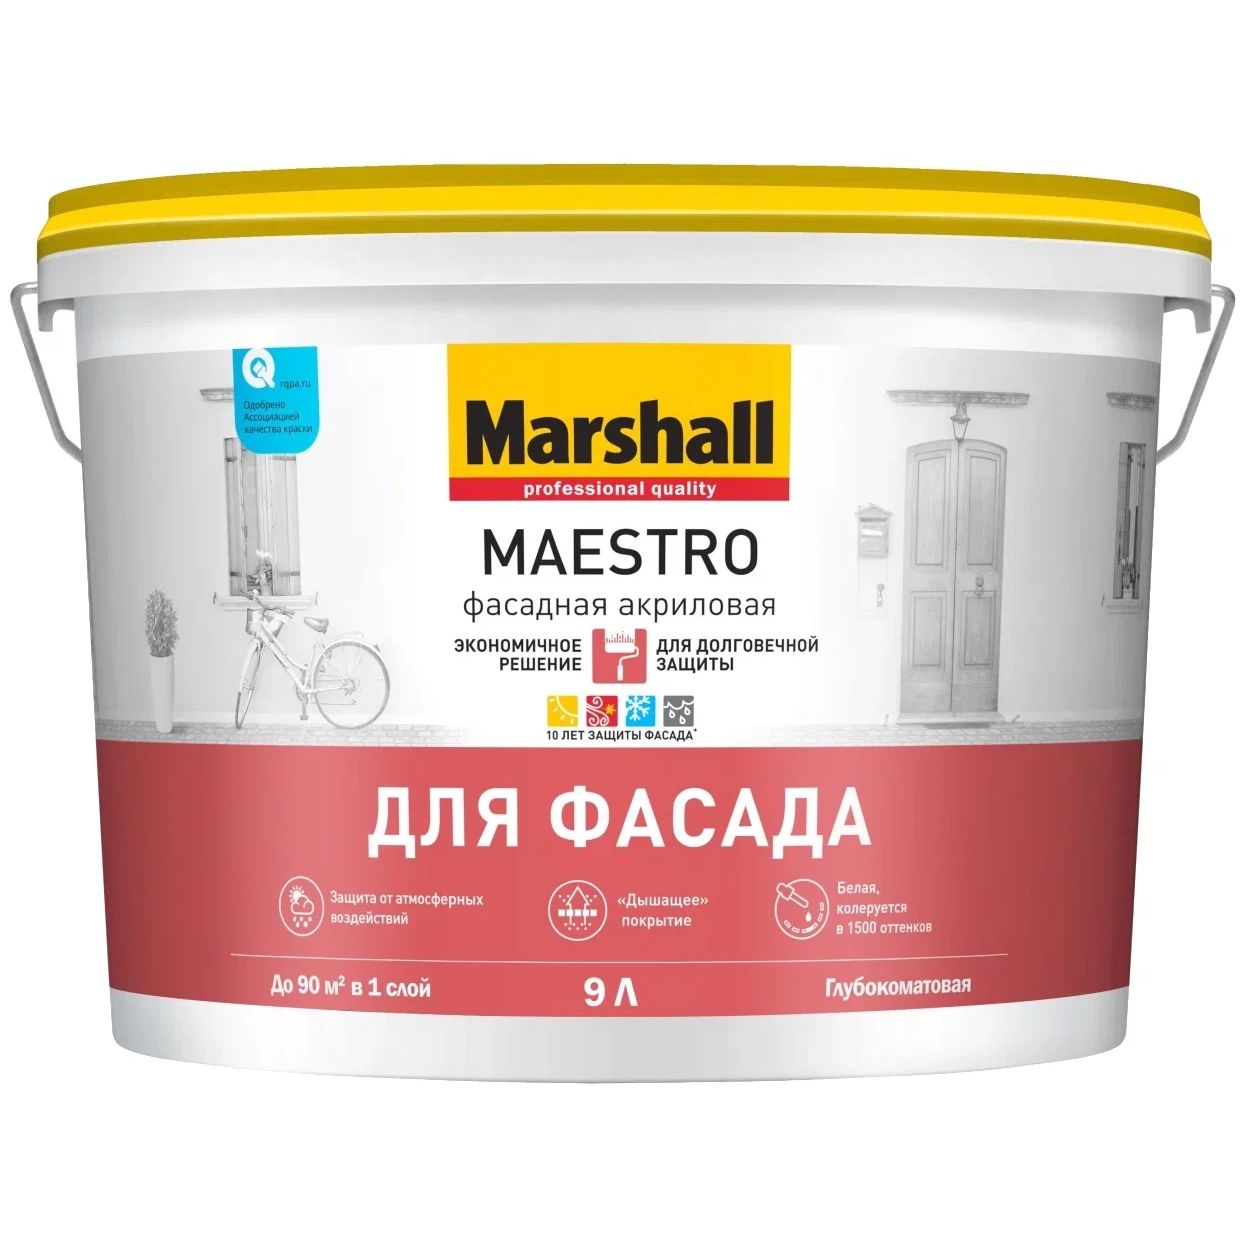 Краска Marshall Maestro фасадная акриловая, глубокоматовая, база BW, 9 л краска marshall maestro фасадная акриловая глубокоматовая bc 4 5 л